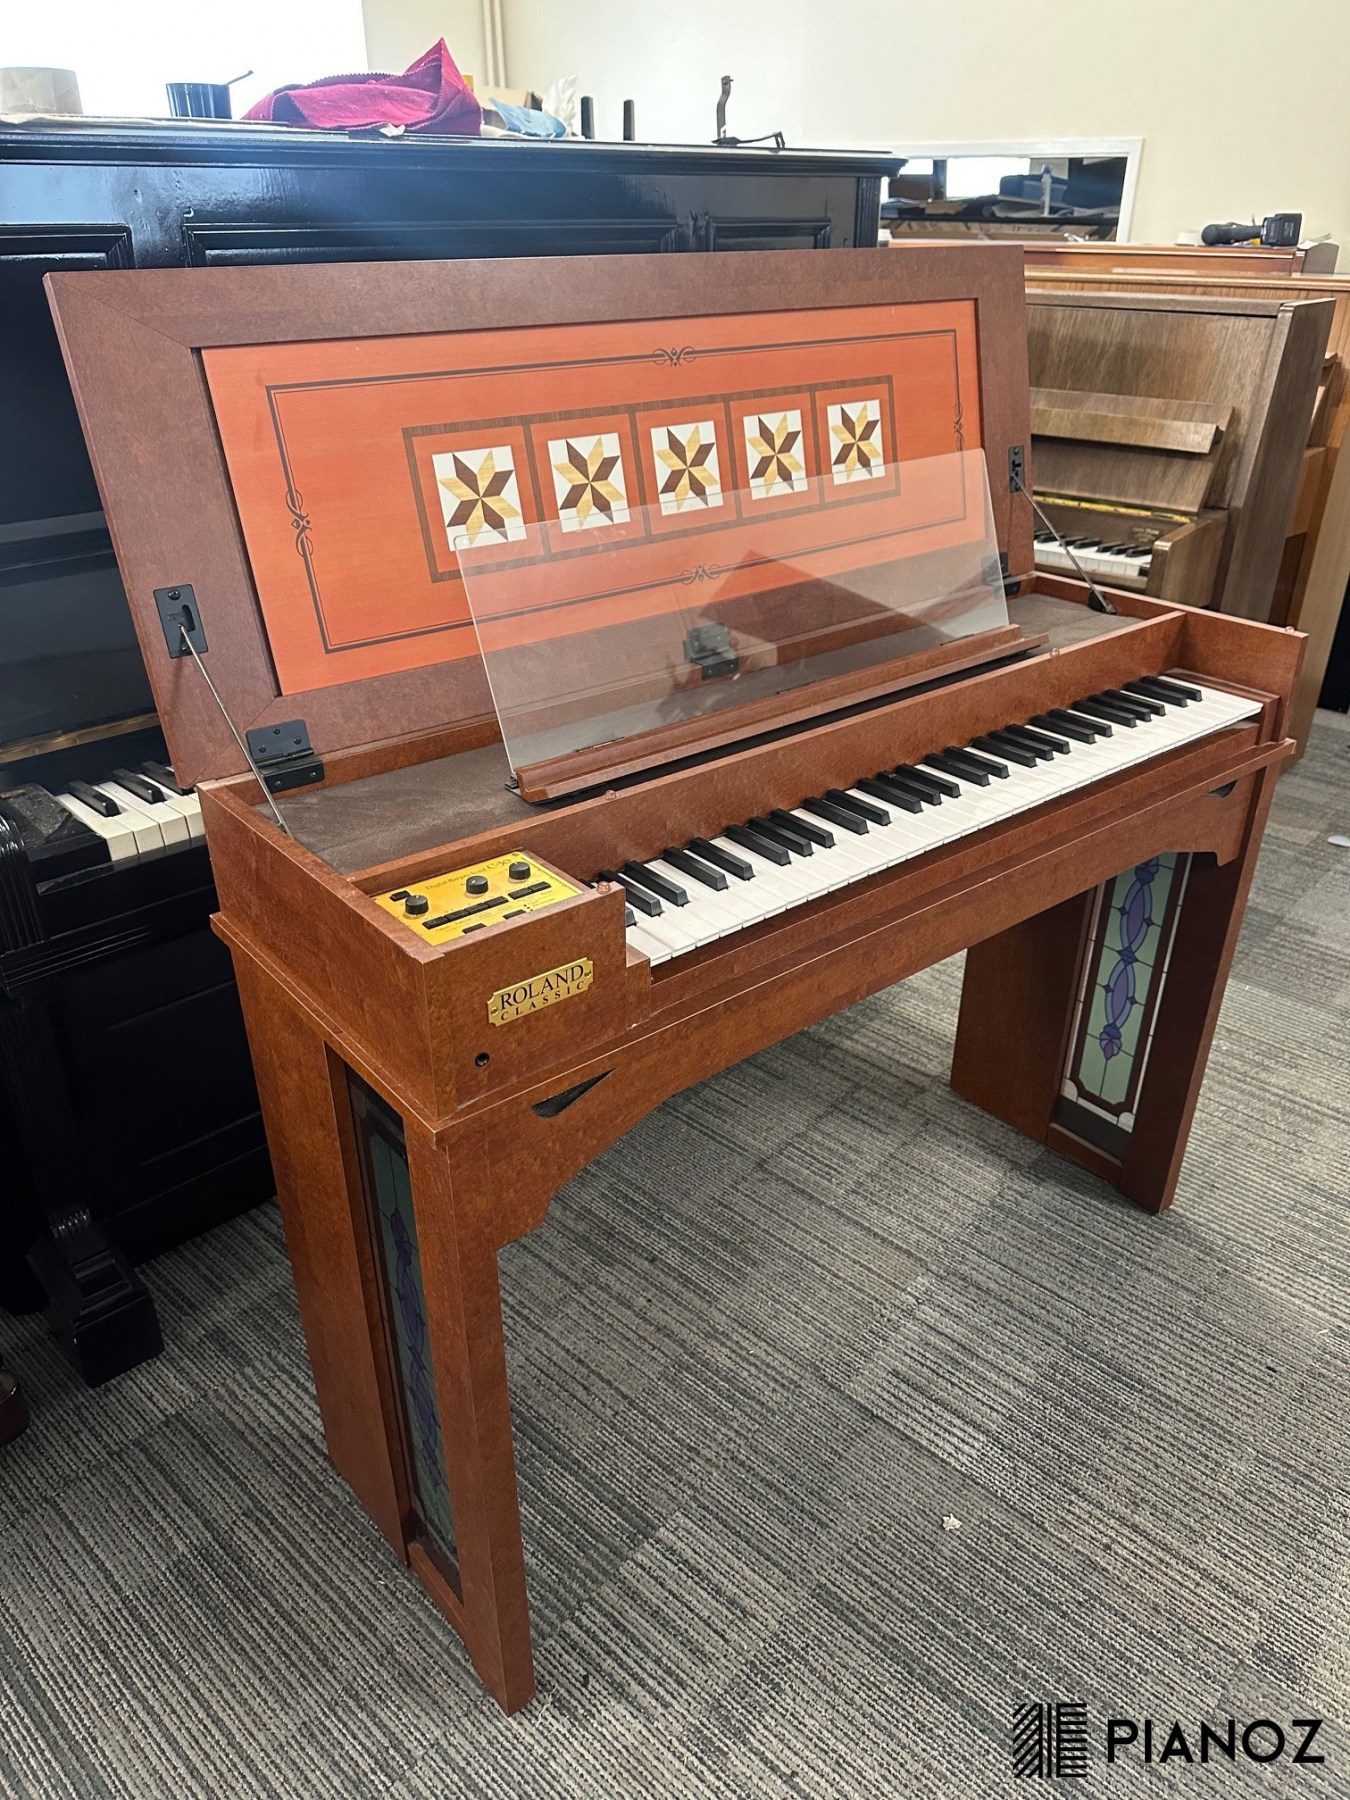 Roland C30 Digital Harpsichord Digital Piano piano for sale in UK